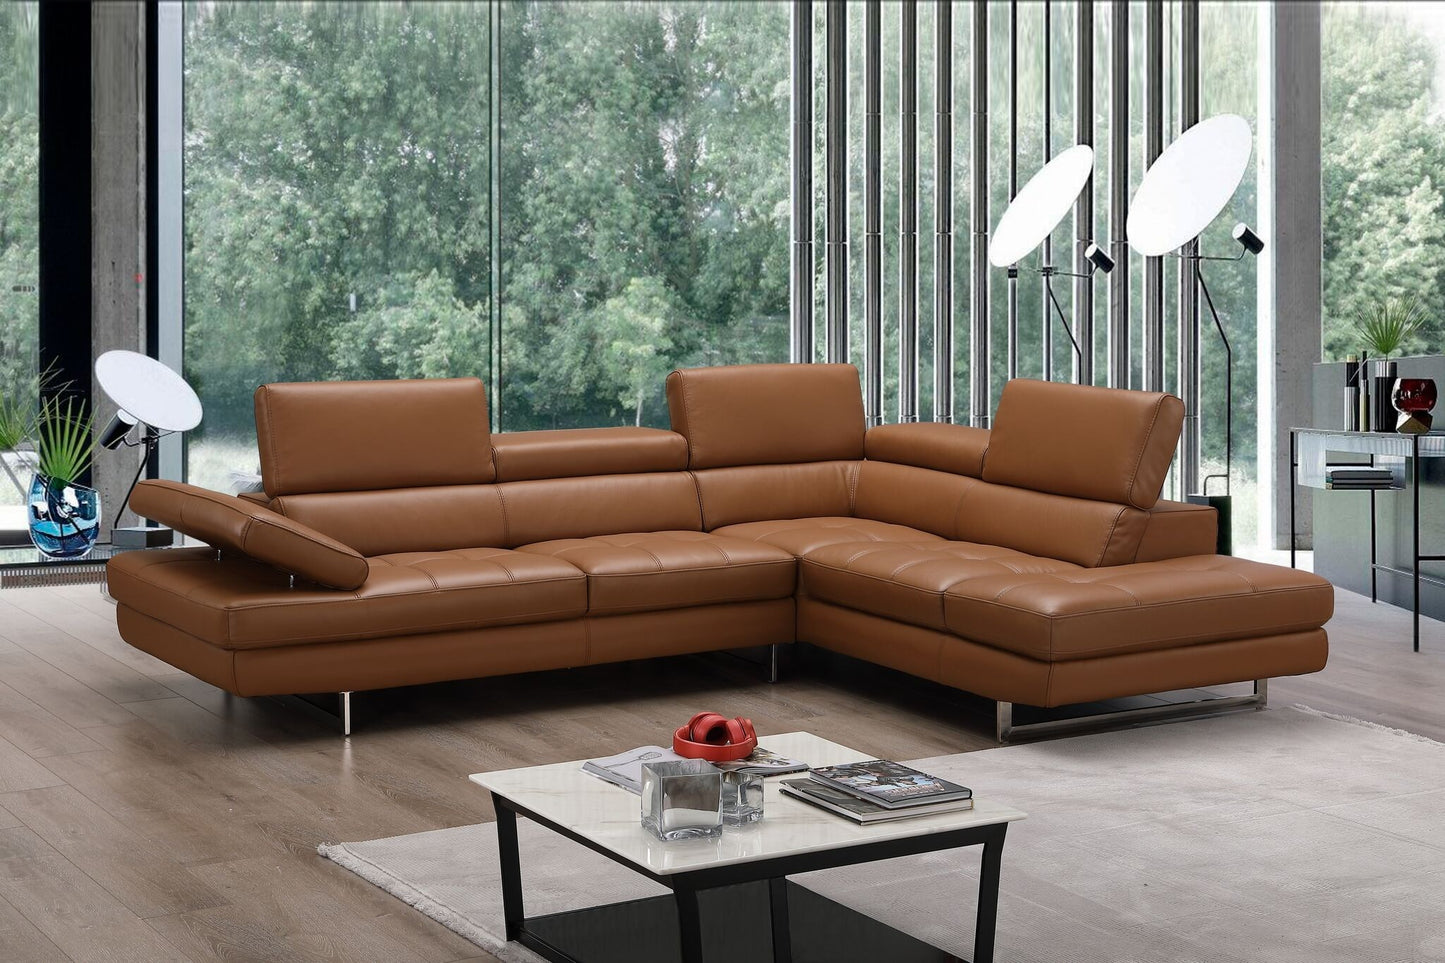 A761 Italian Leather Sectional Sofa Caramel RHF by JM